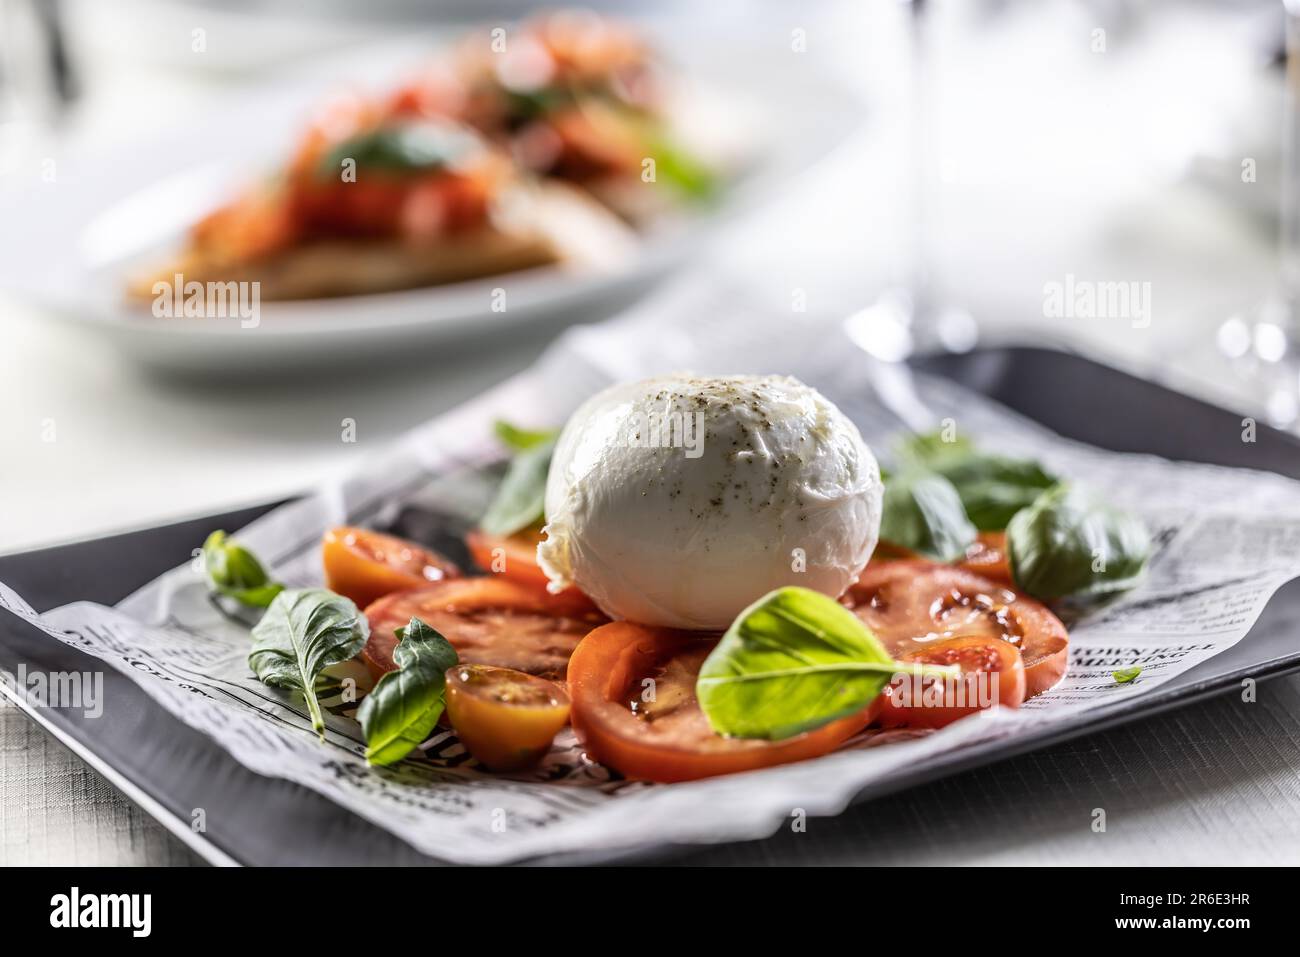 Caprese style salad with sliced tomatoes, basil and ball of buffalo mozzarella. Stock Photo